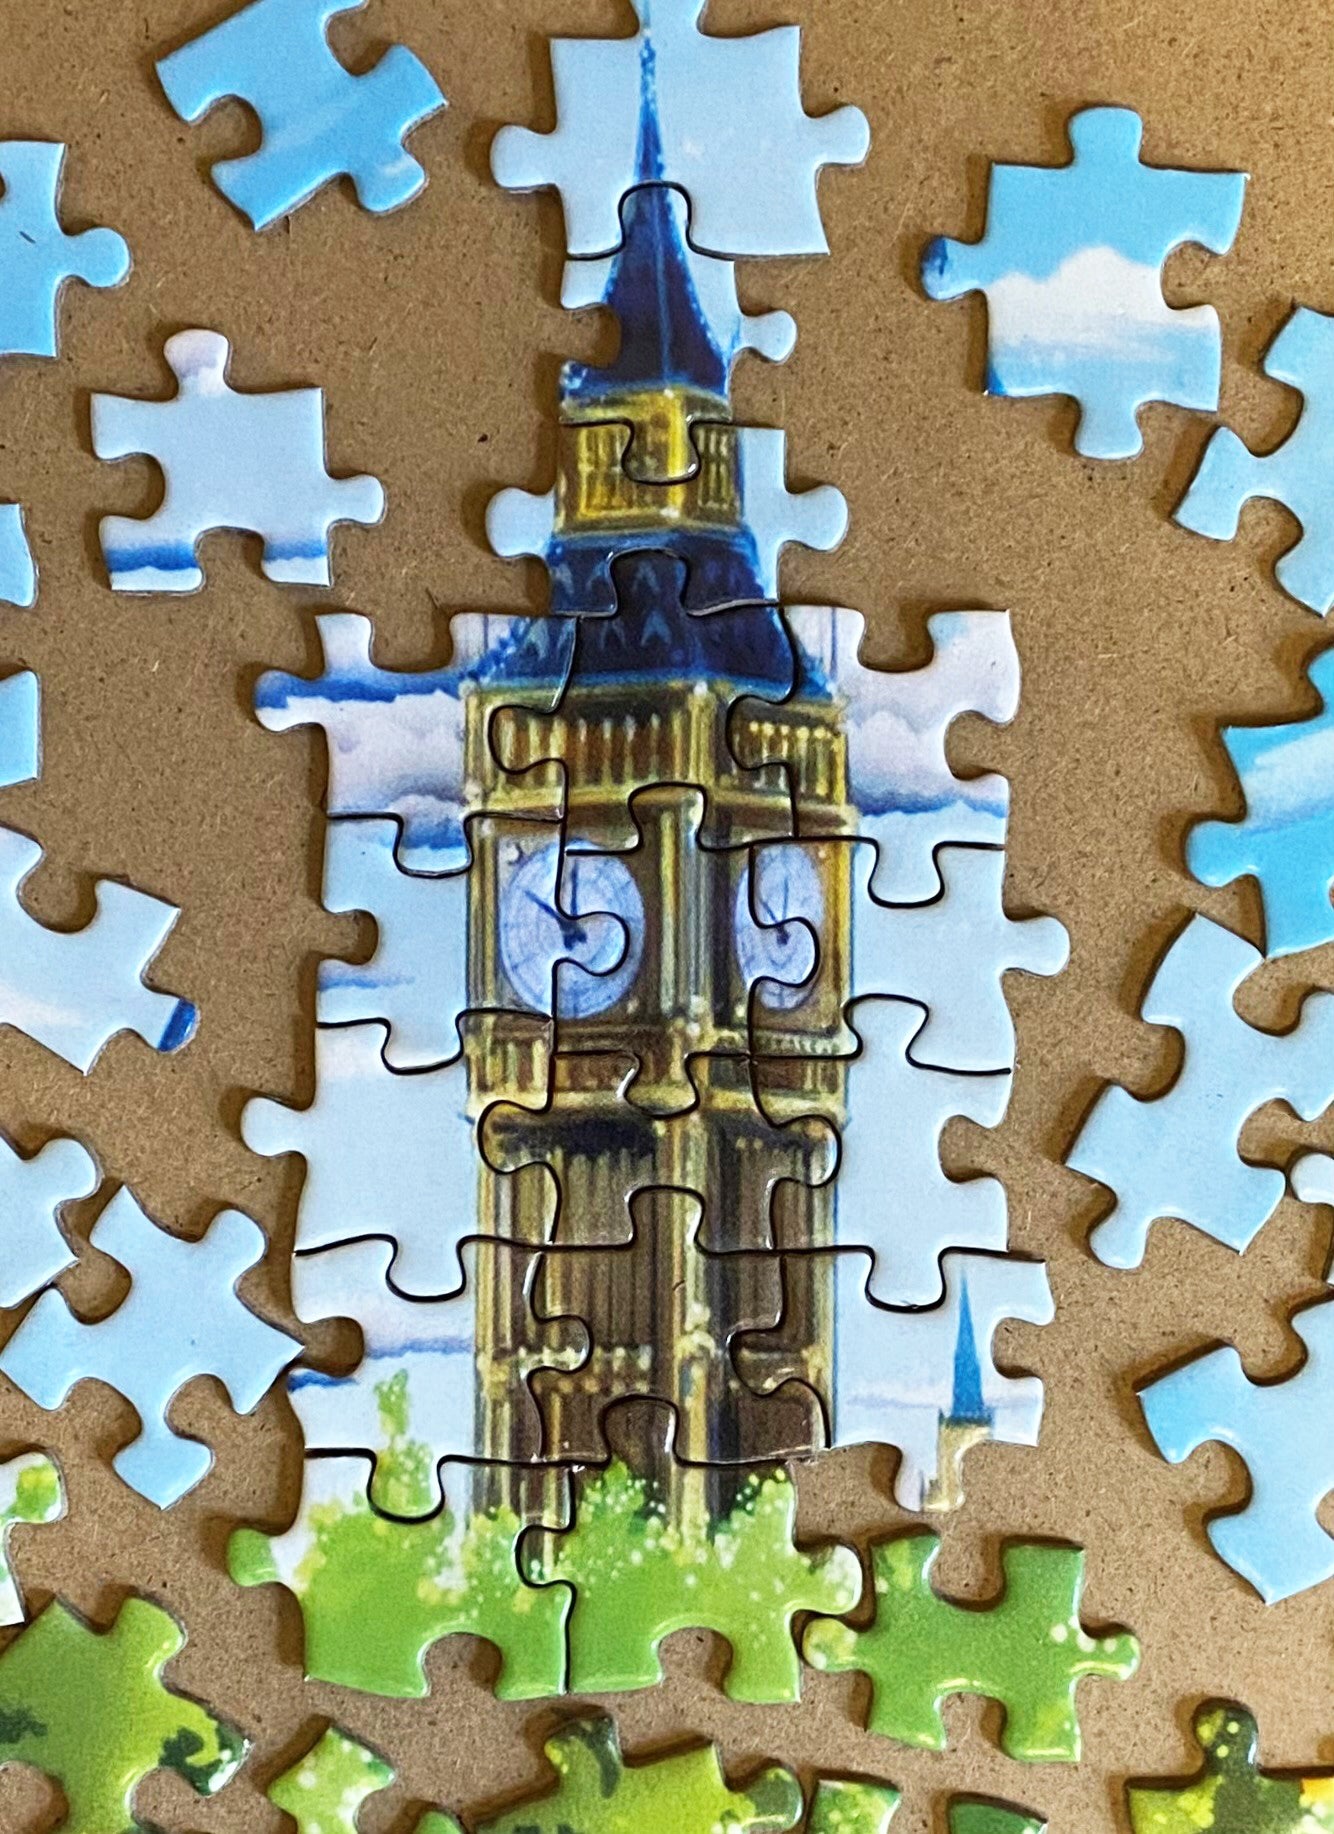 Puzzle Master Inc - #1 Platform to Buy Puzzles Online